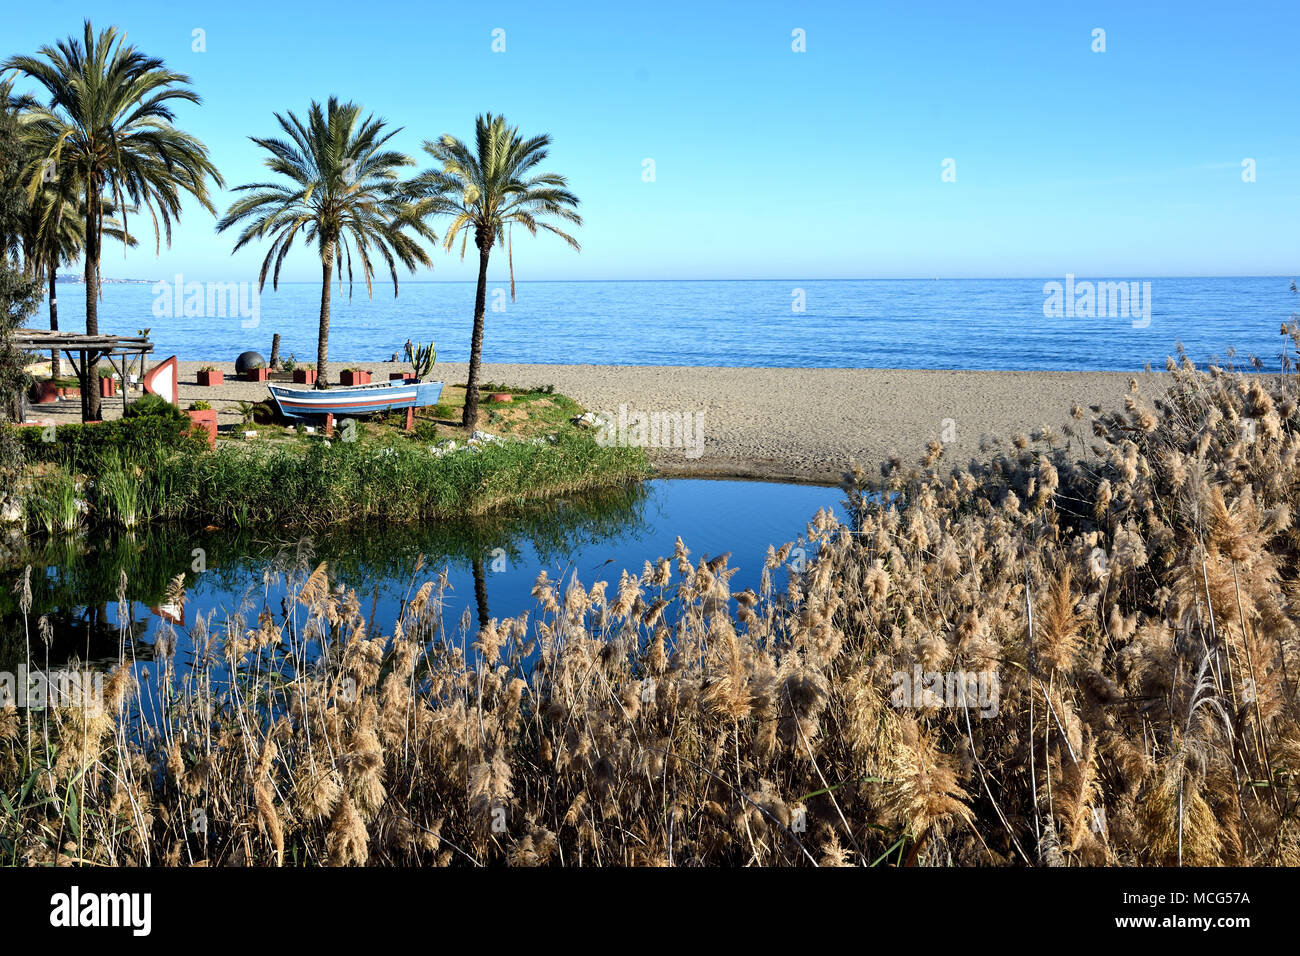 Benidorm seaside resort on the eastern coast of Spain, part of the Valencia region’s famed Costa Blanca. Spain, Spanish. Stock Photo